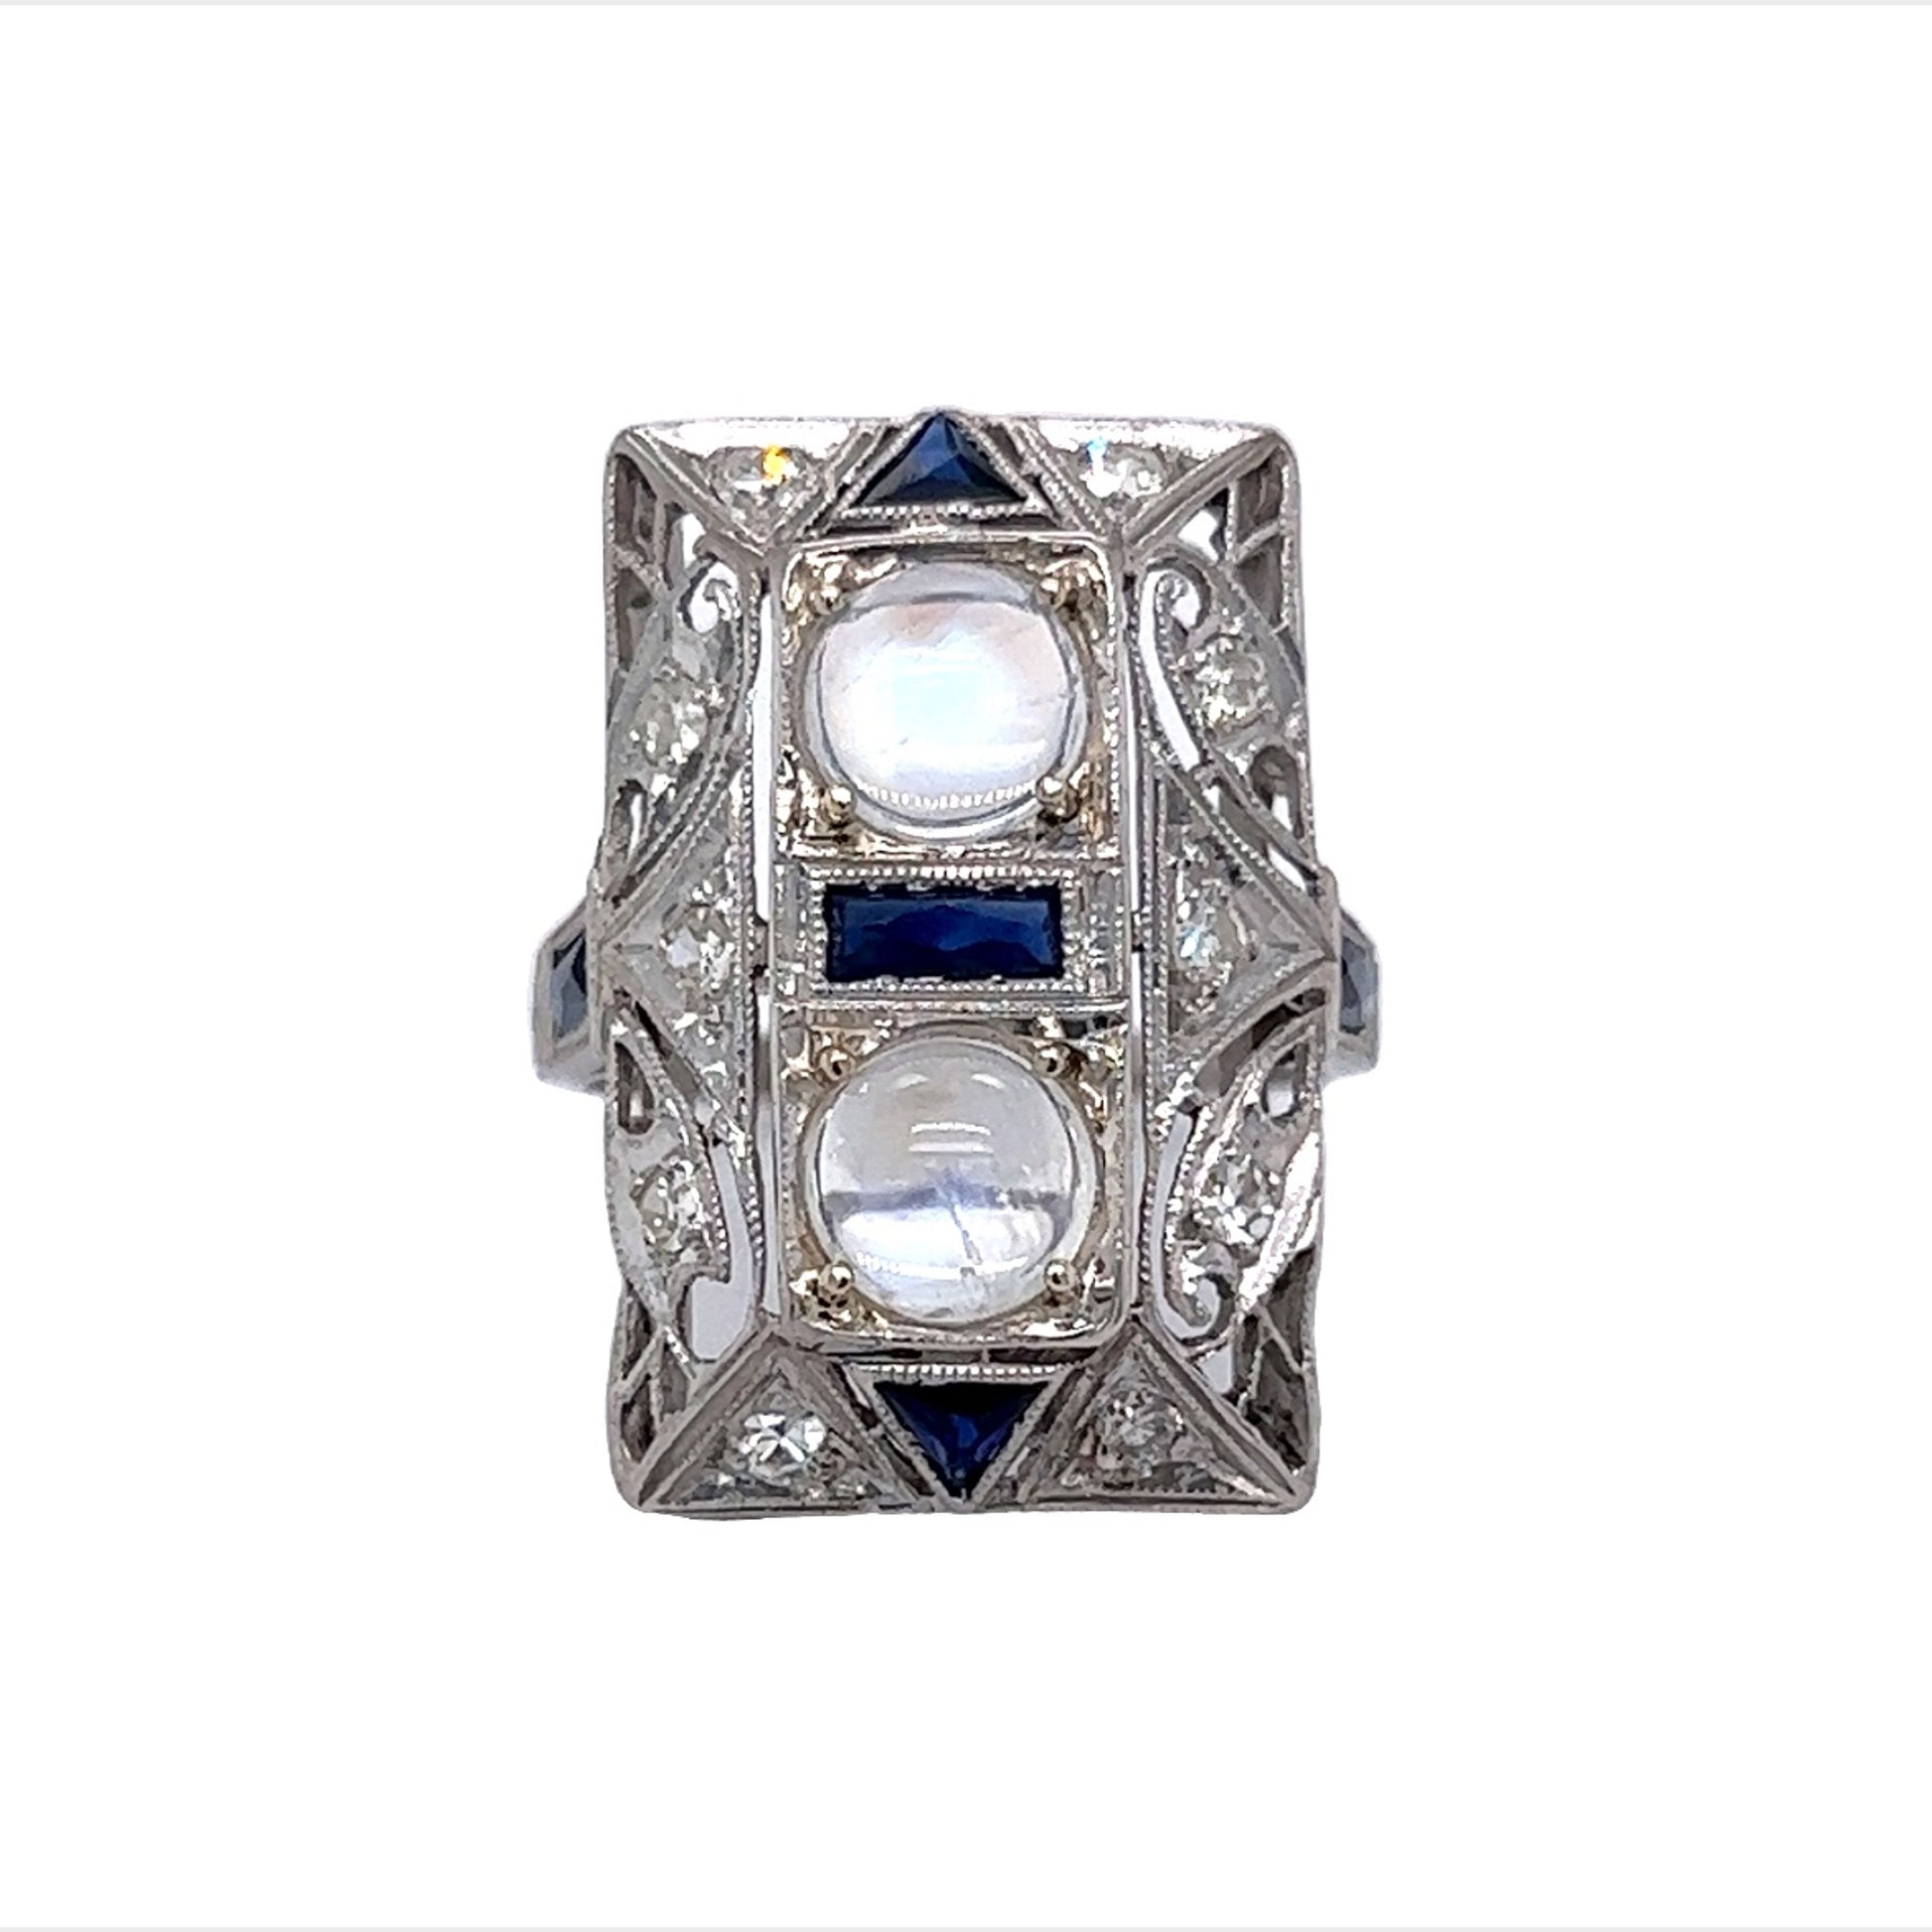 Vintage Art Deco Moonstone Cocktail Ring in Platinum